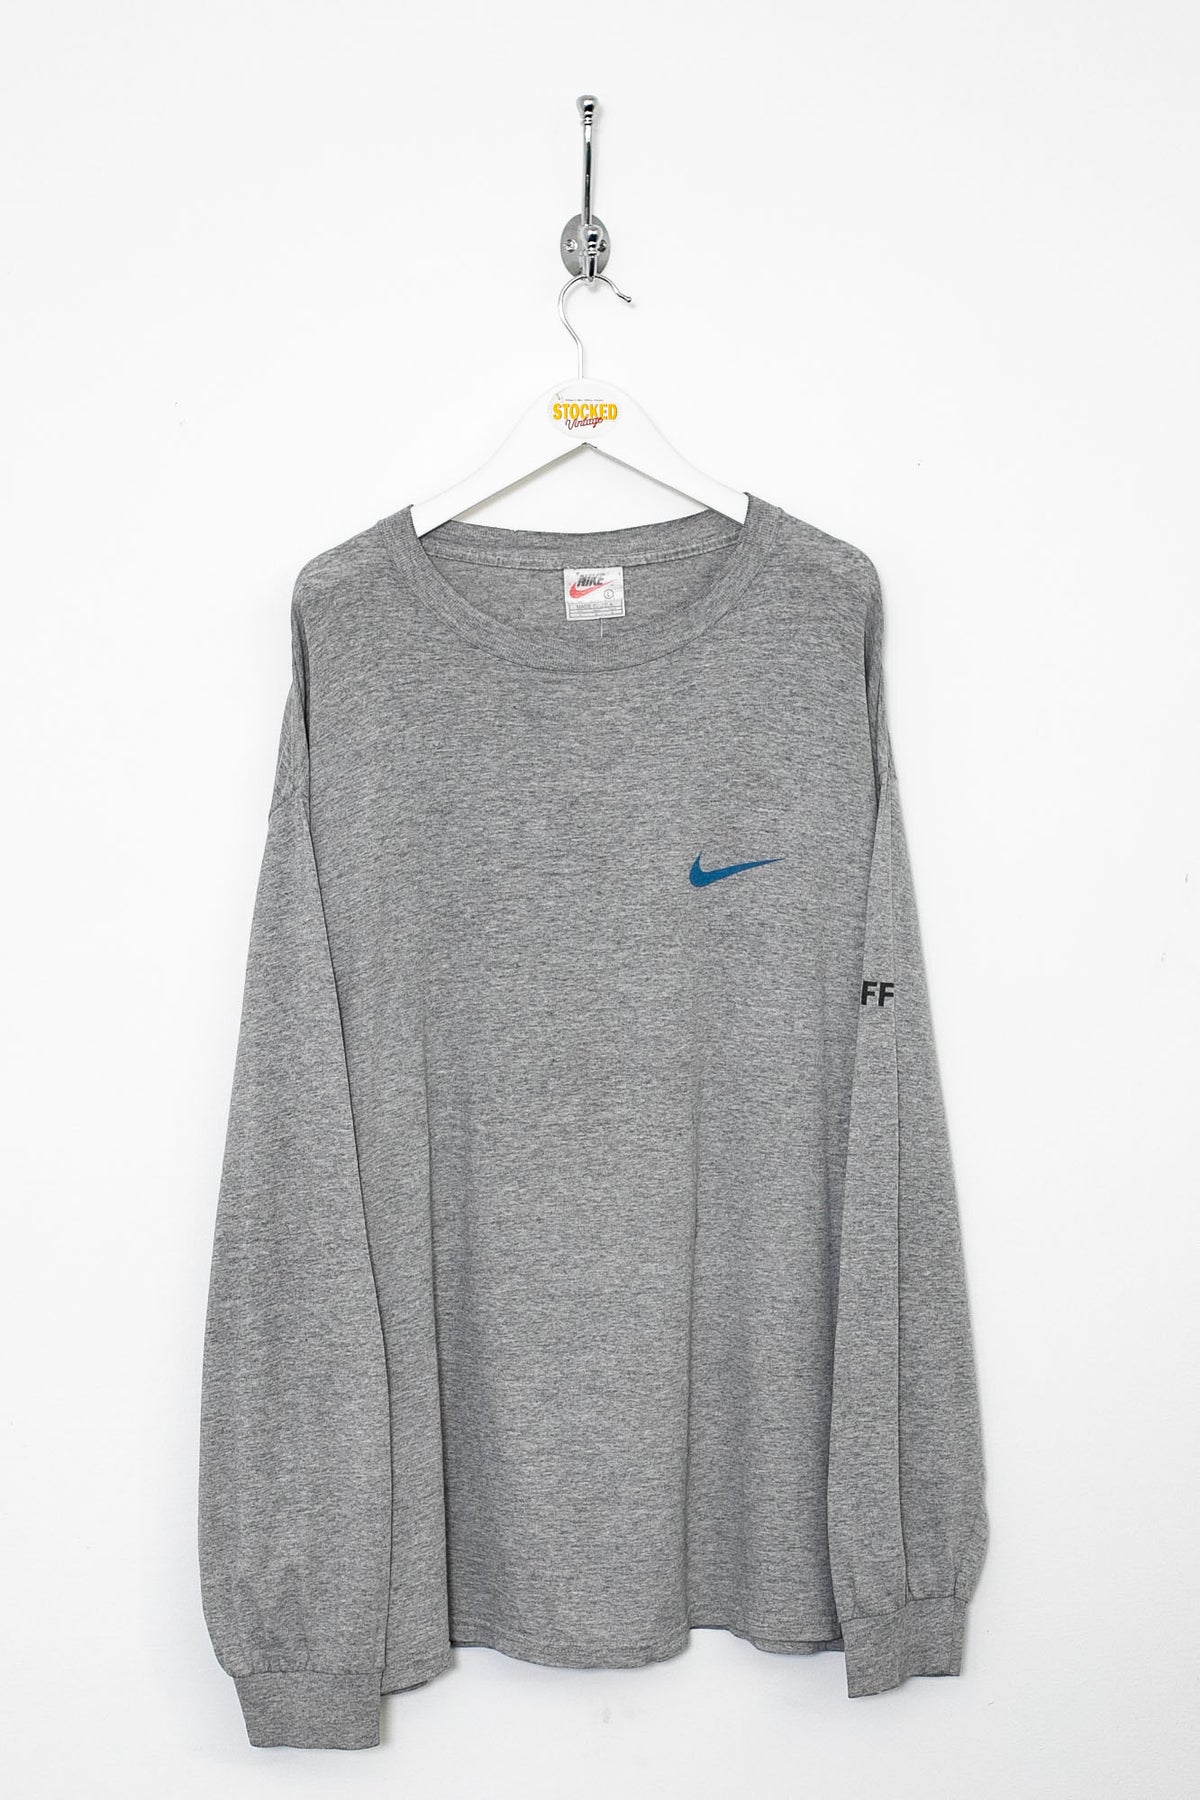 90s Nike Long Sleeve Tee (L)